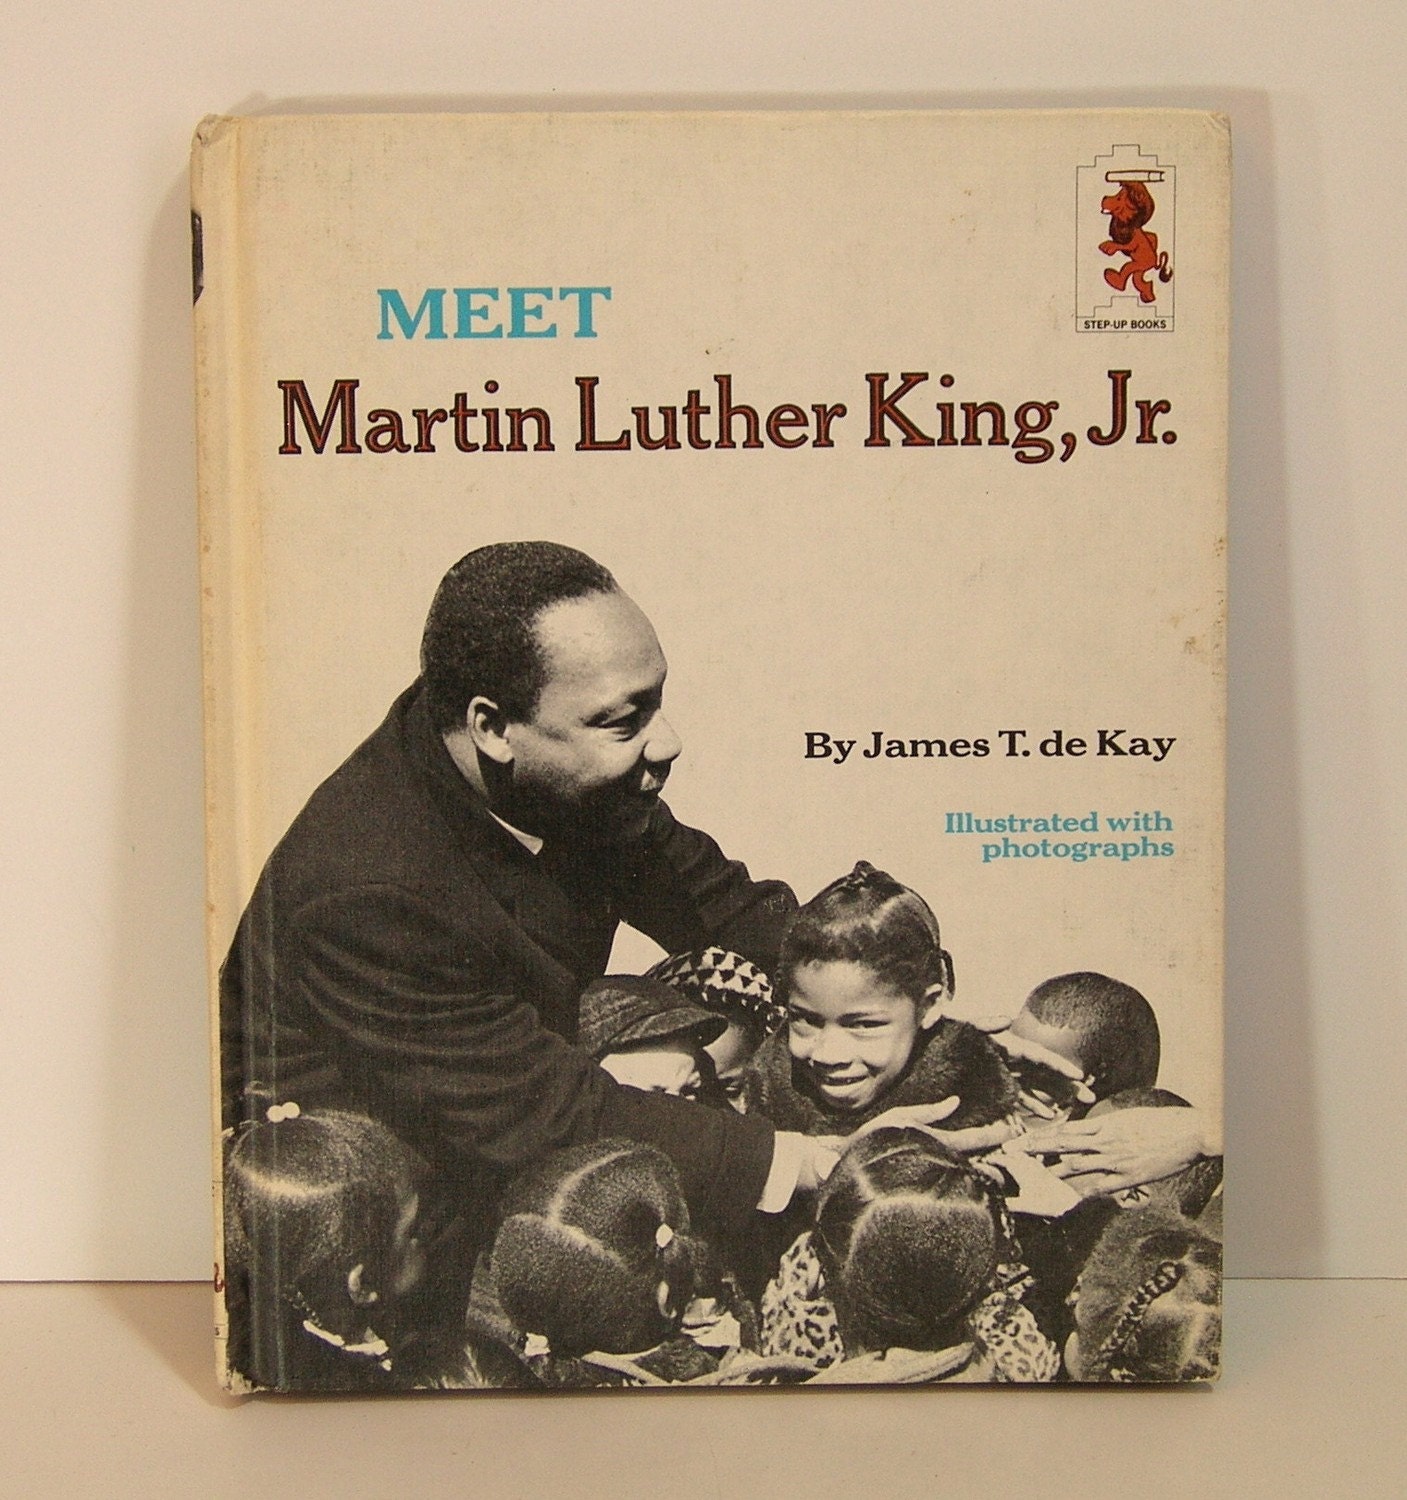 Meet Martin Luther King, Jr. Vintage Children's Book